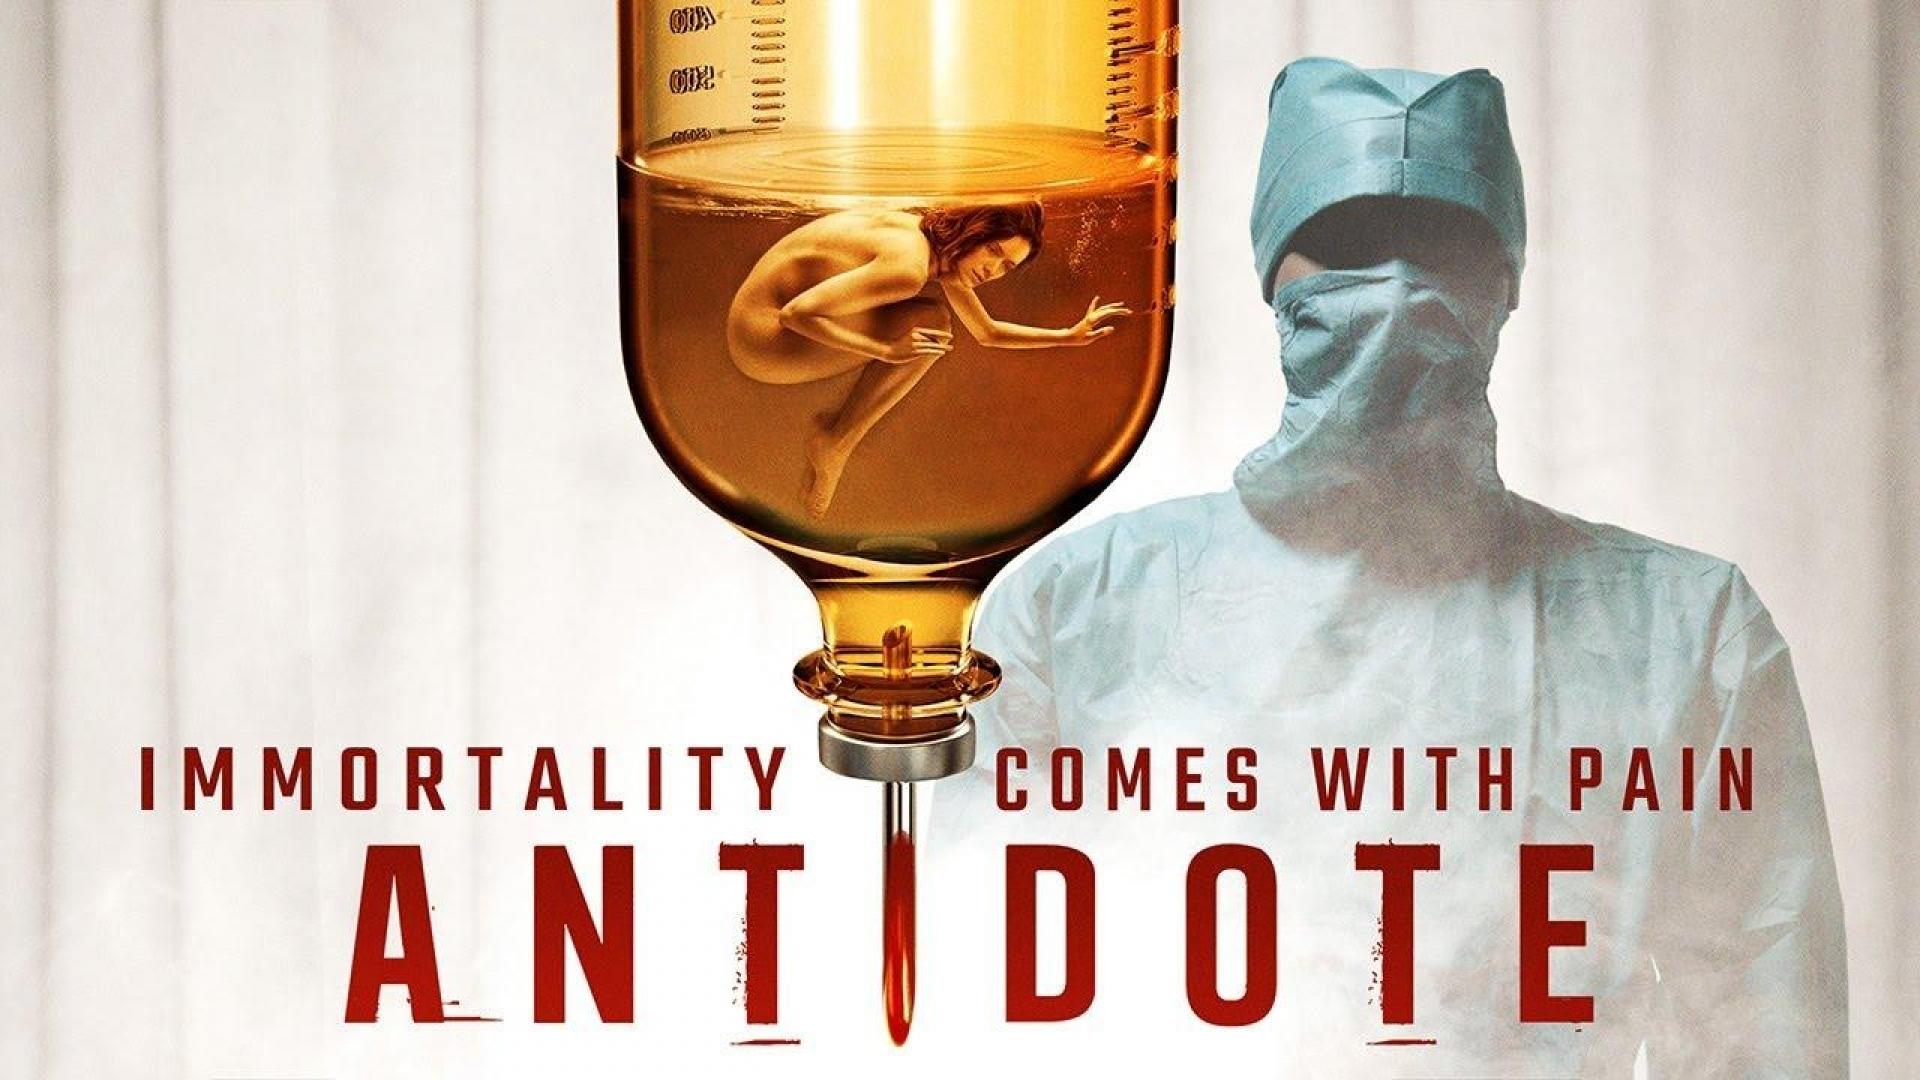 فیلم  Antidote 2021 بدون سانسور